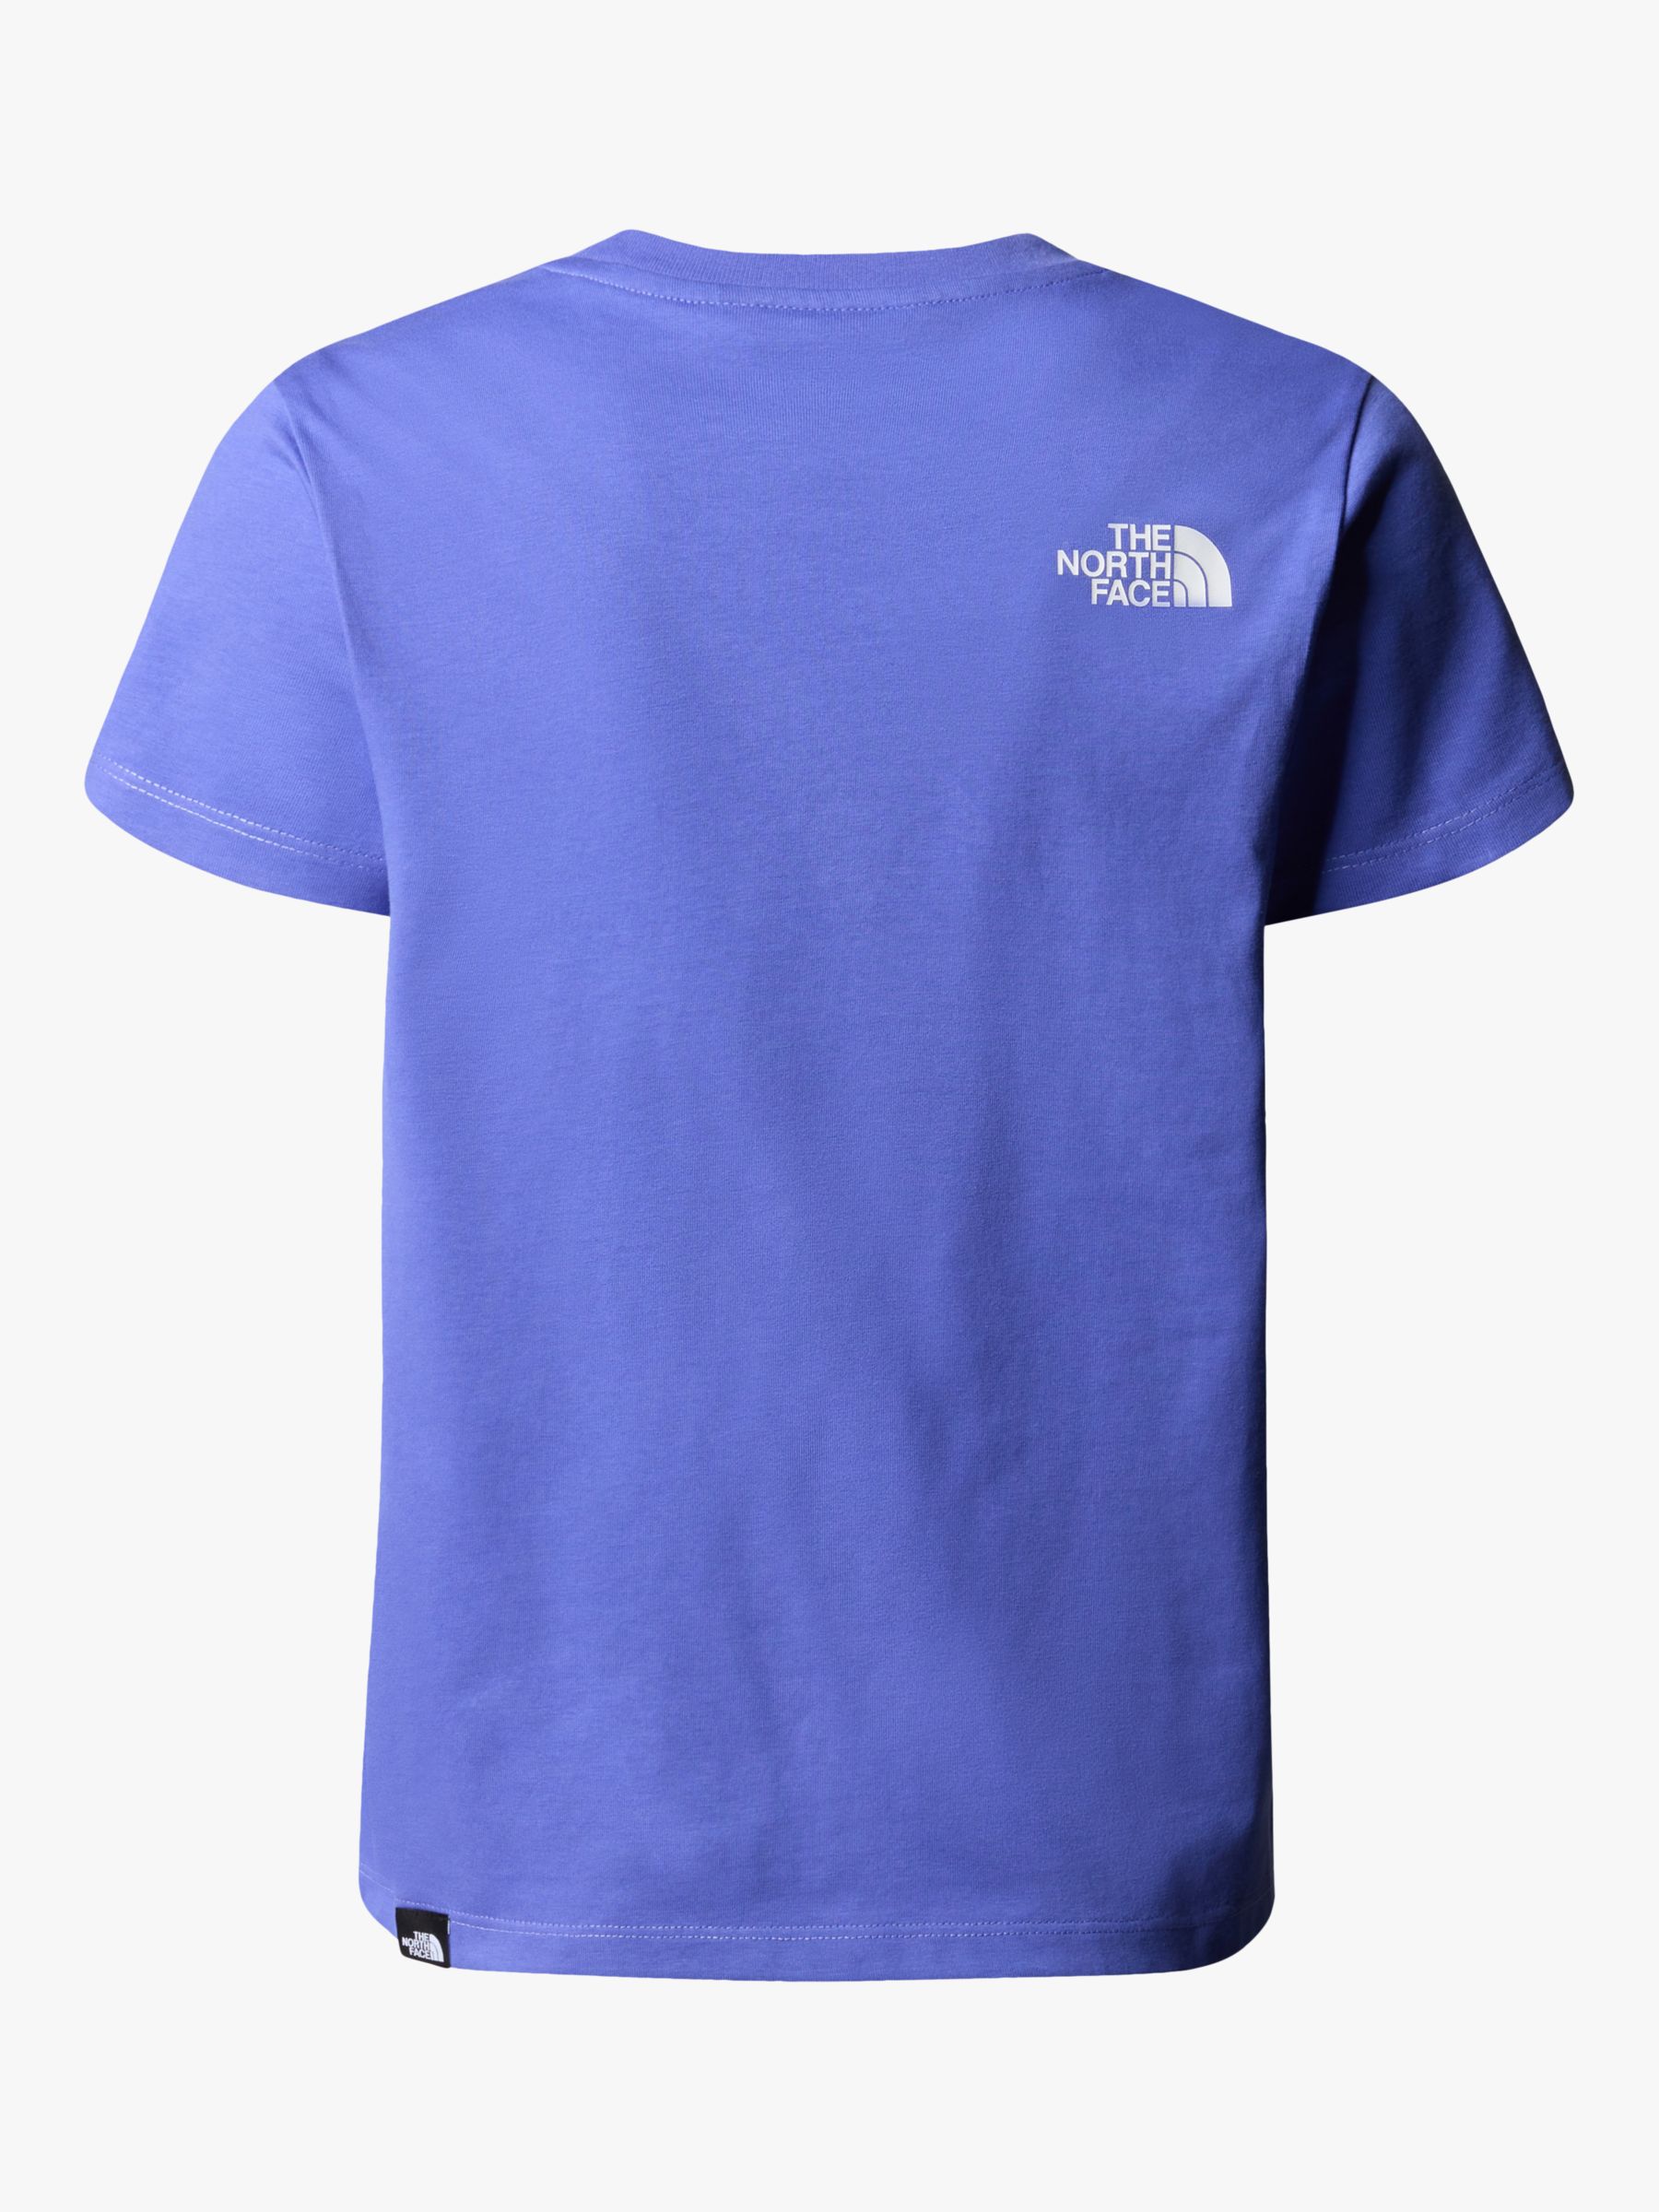 The North Face Kids' Easy Logo Short Sleeve T-Shirt, Dopamine Blue, L